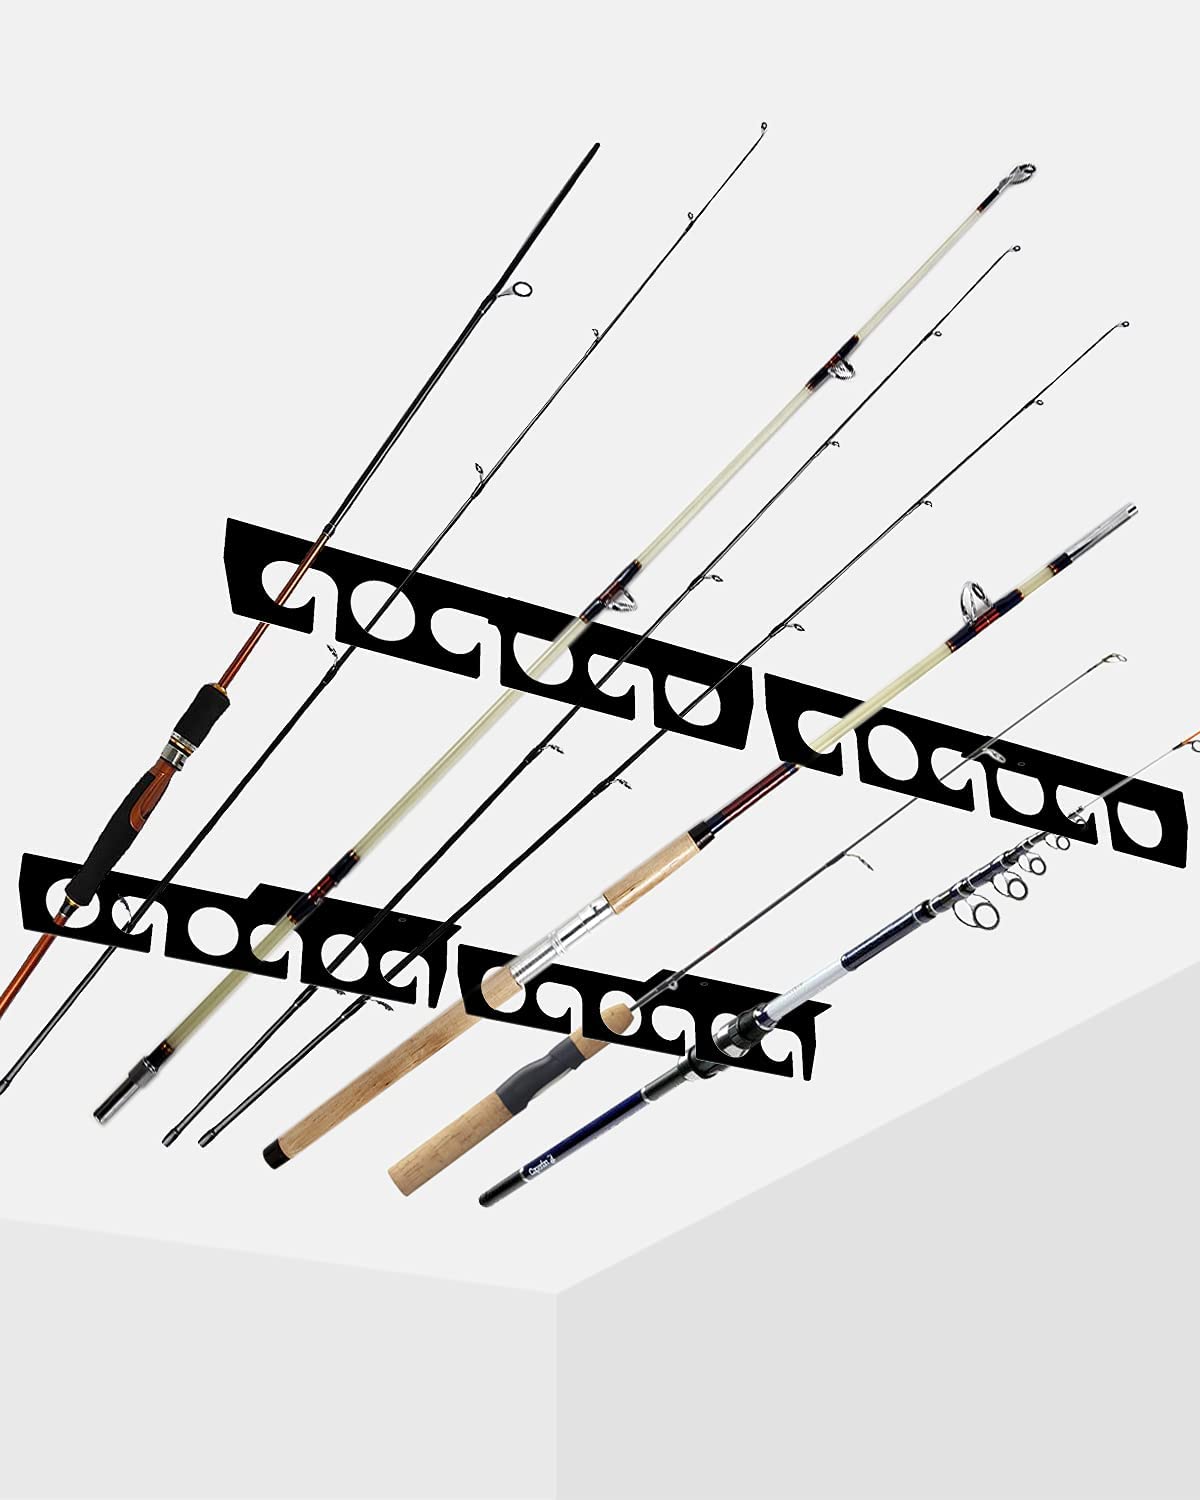 PLUSINNO 4 Pack Vertical Fishing Rod Rack, Wall Mounted Fishing